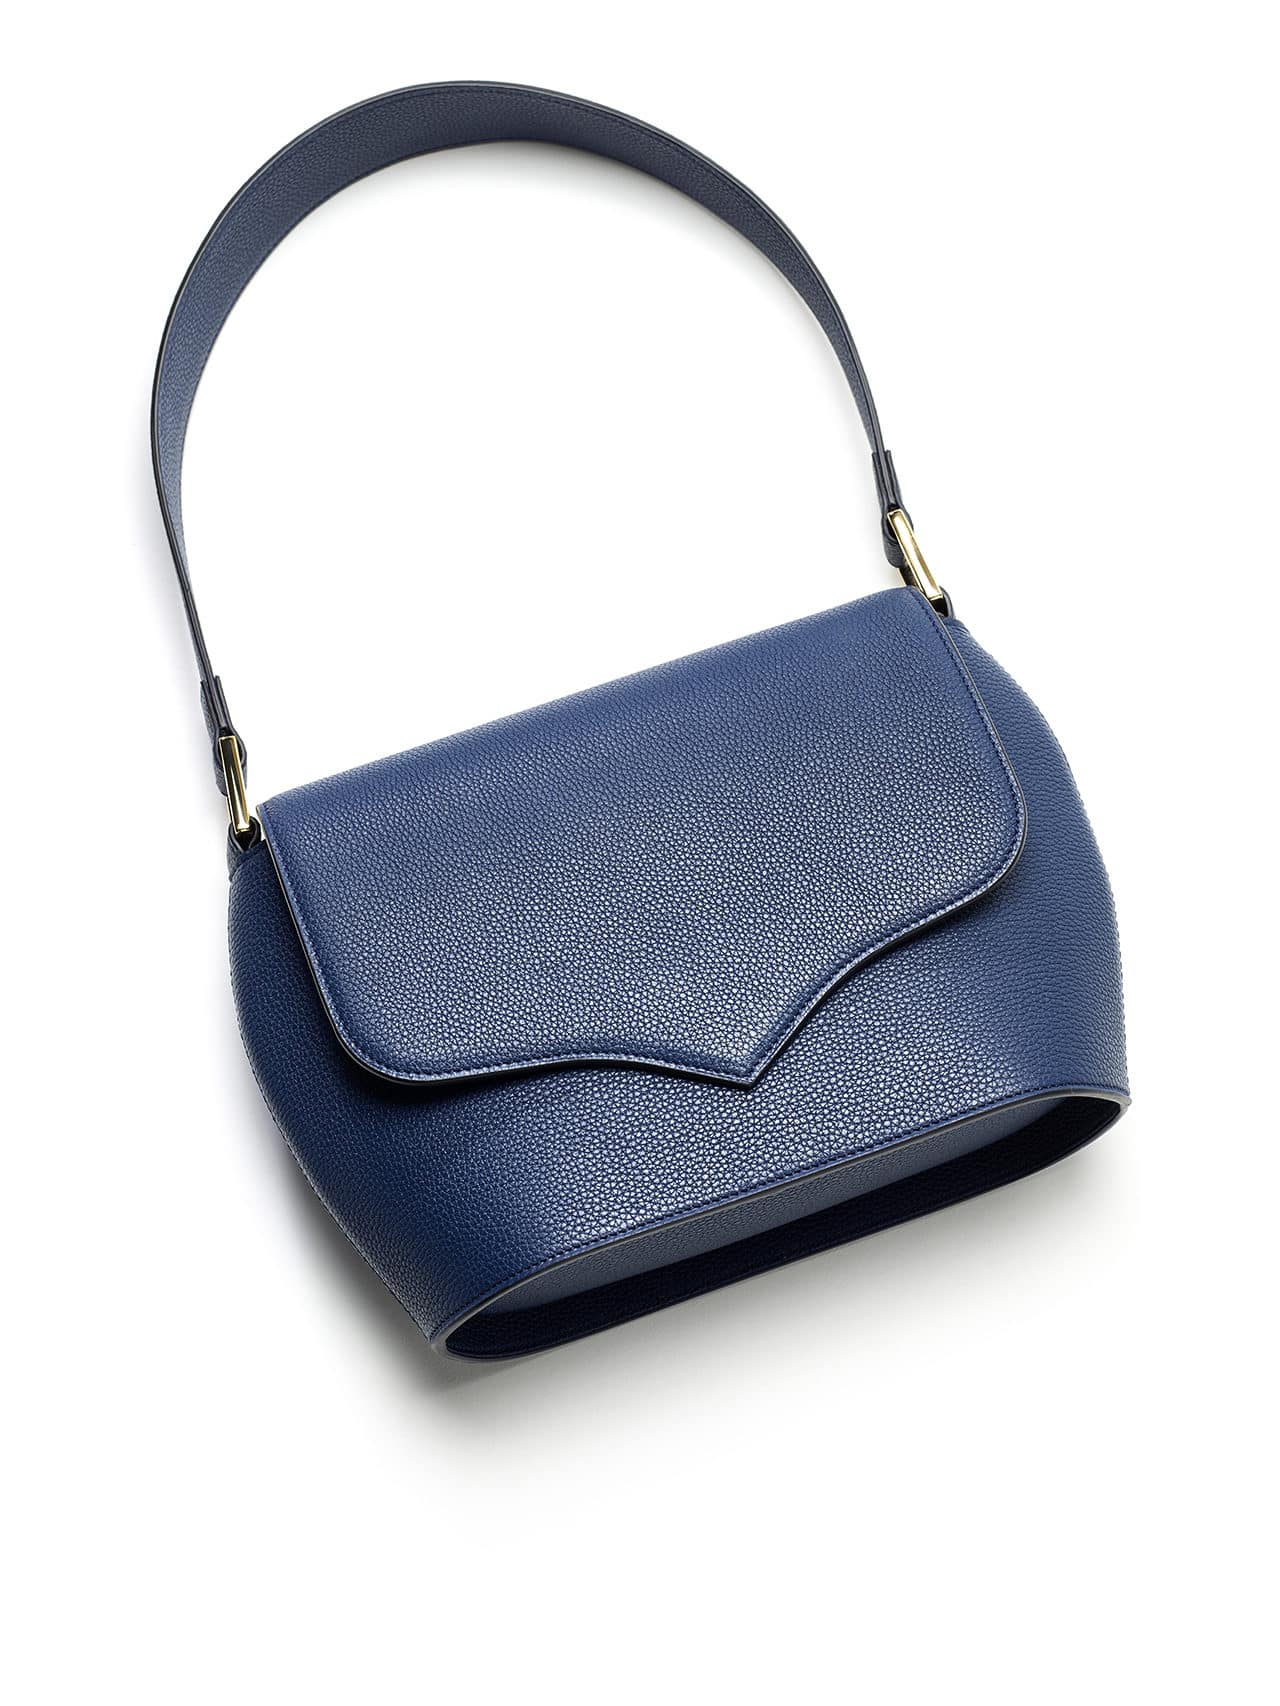 handbag leather blue